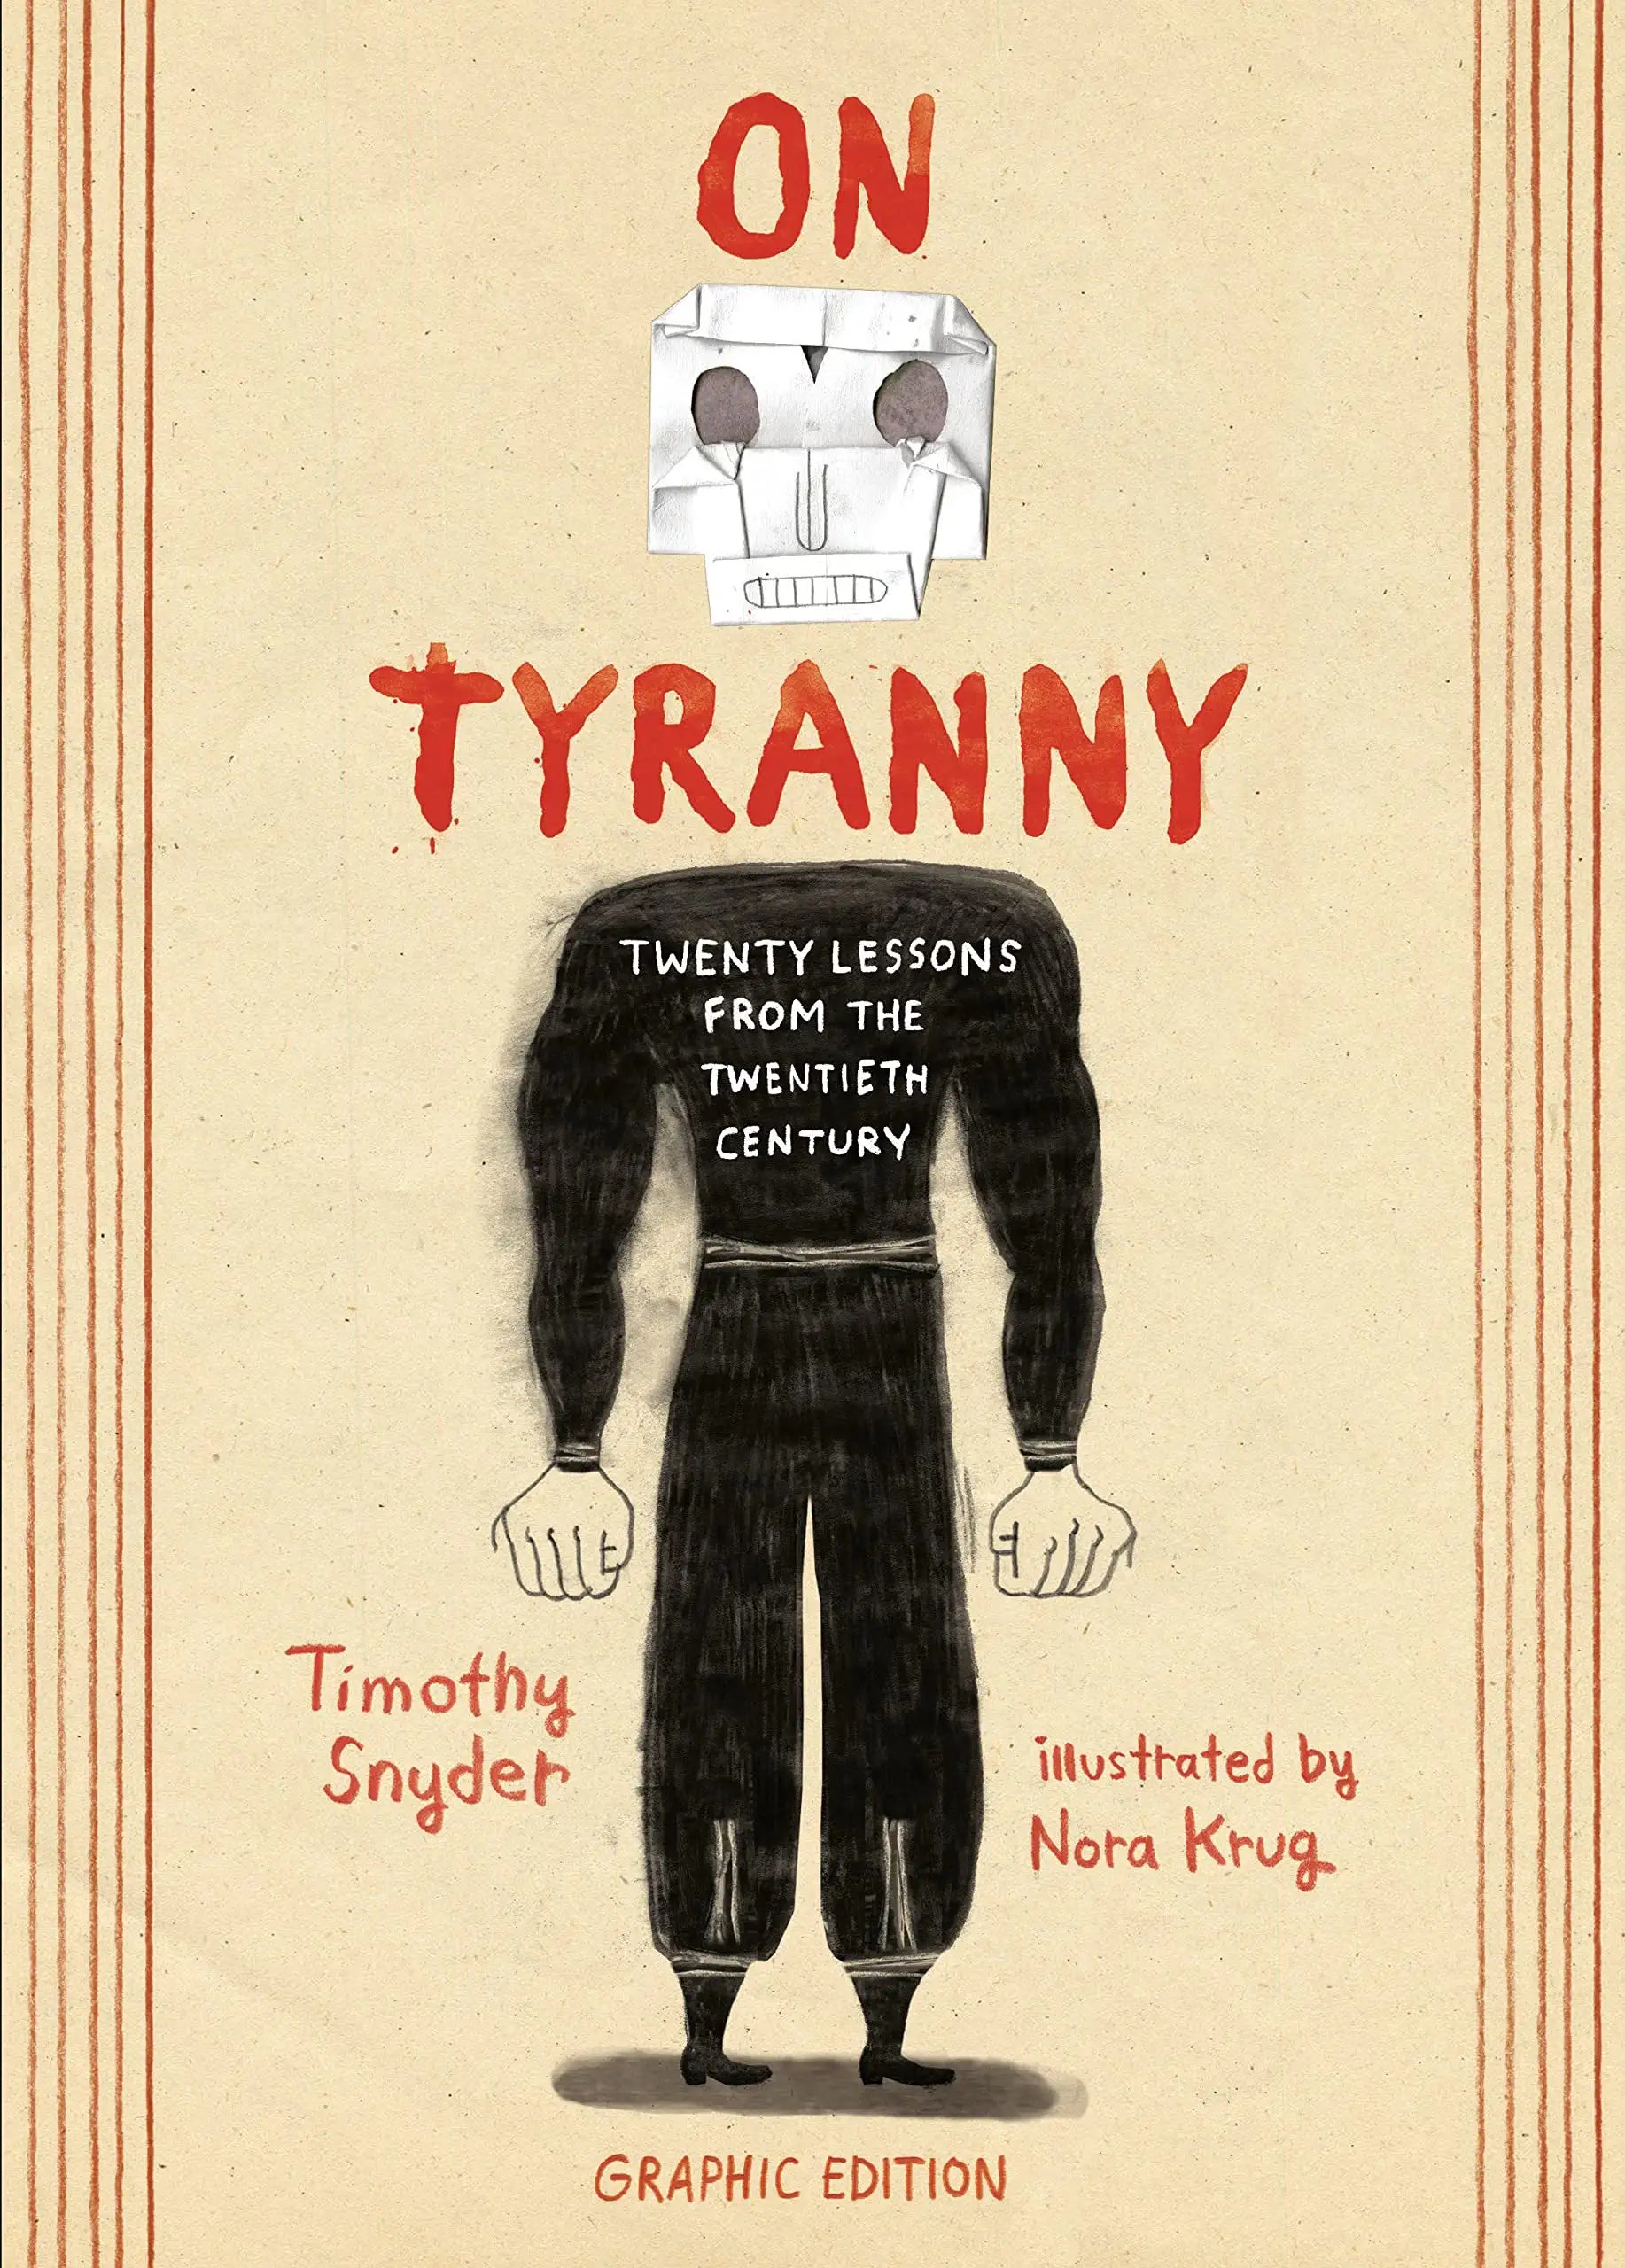 On Tyranny: Graphic Edition